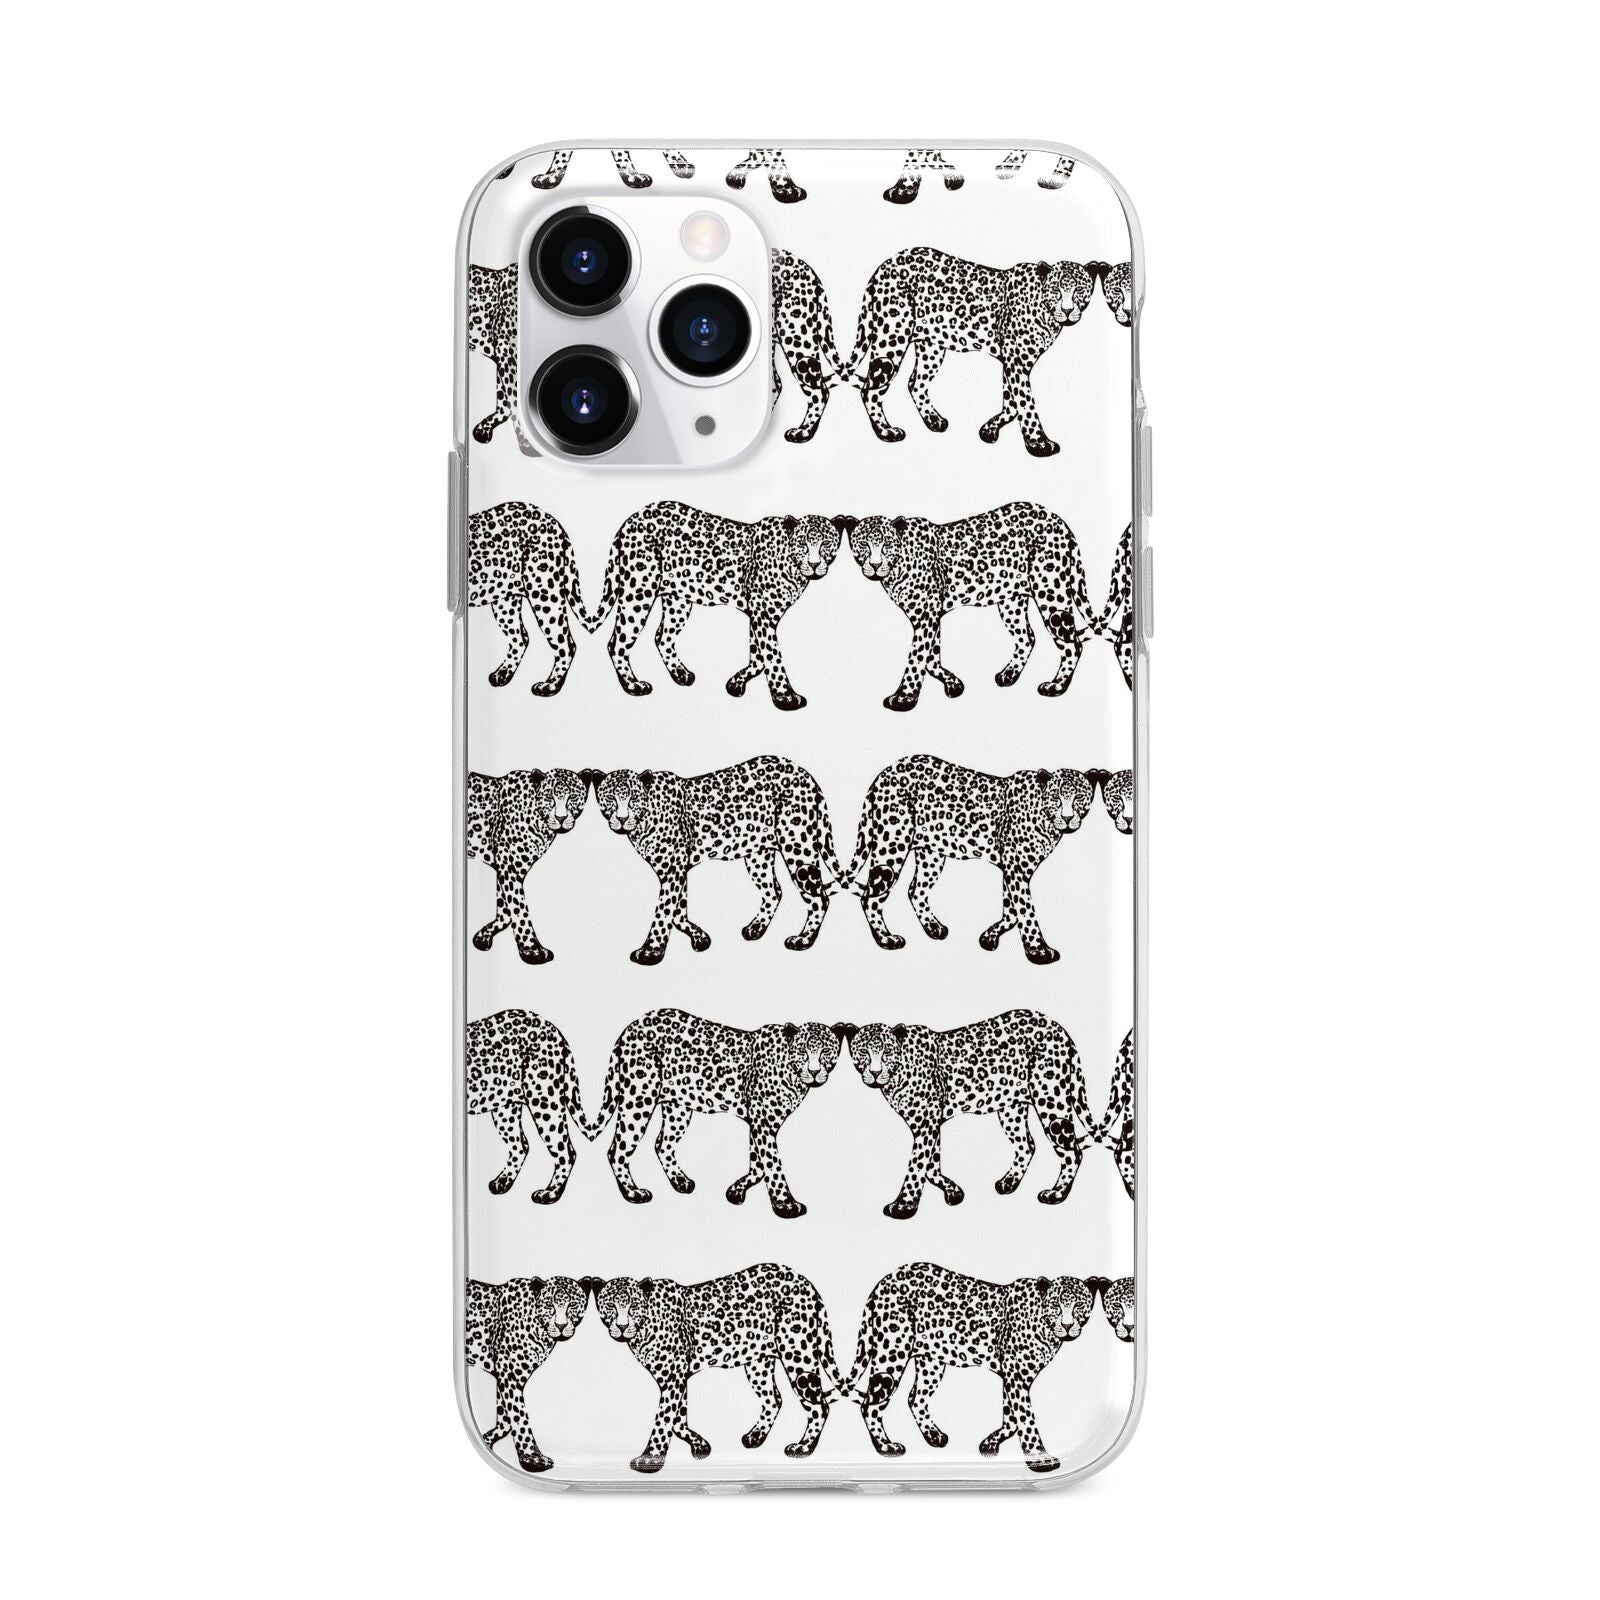 Monochrome Mirrored Leopard Print Apple iPhone 11 Pro in Silver with Bumper Case